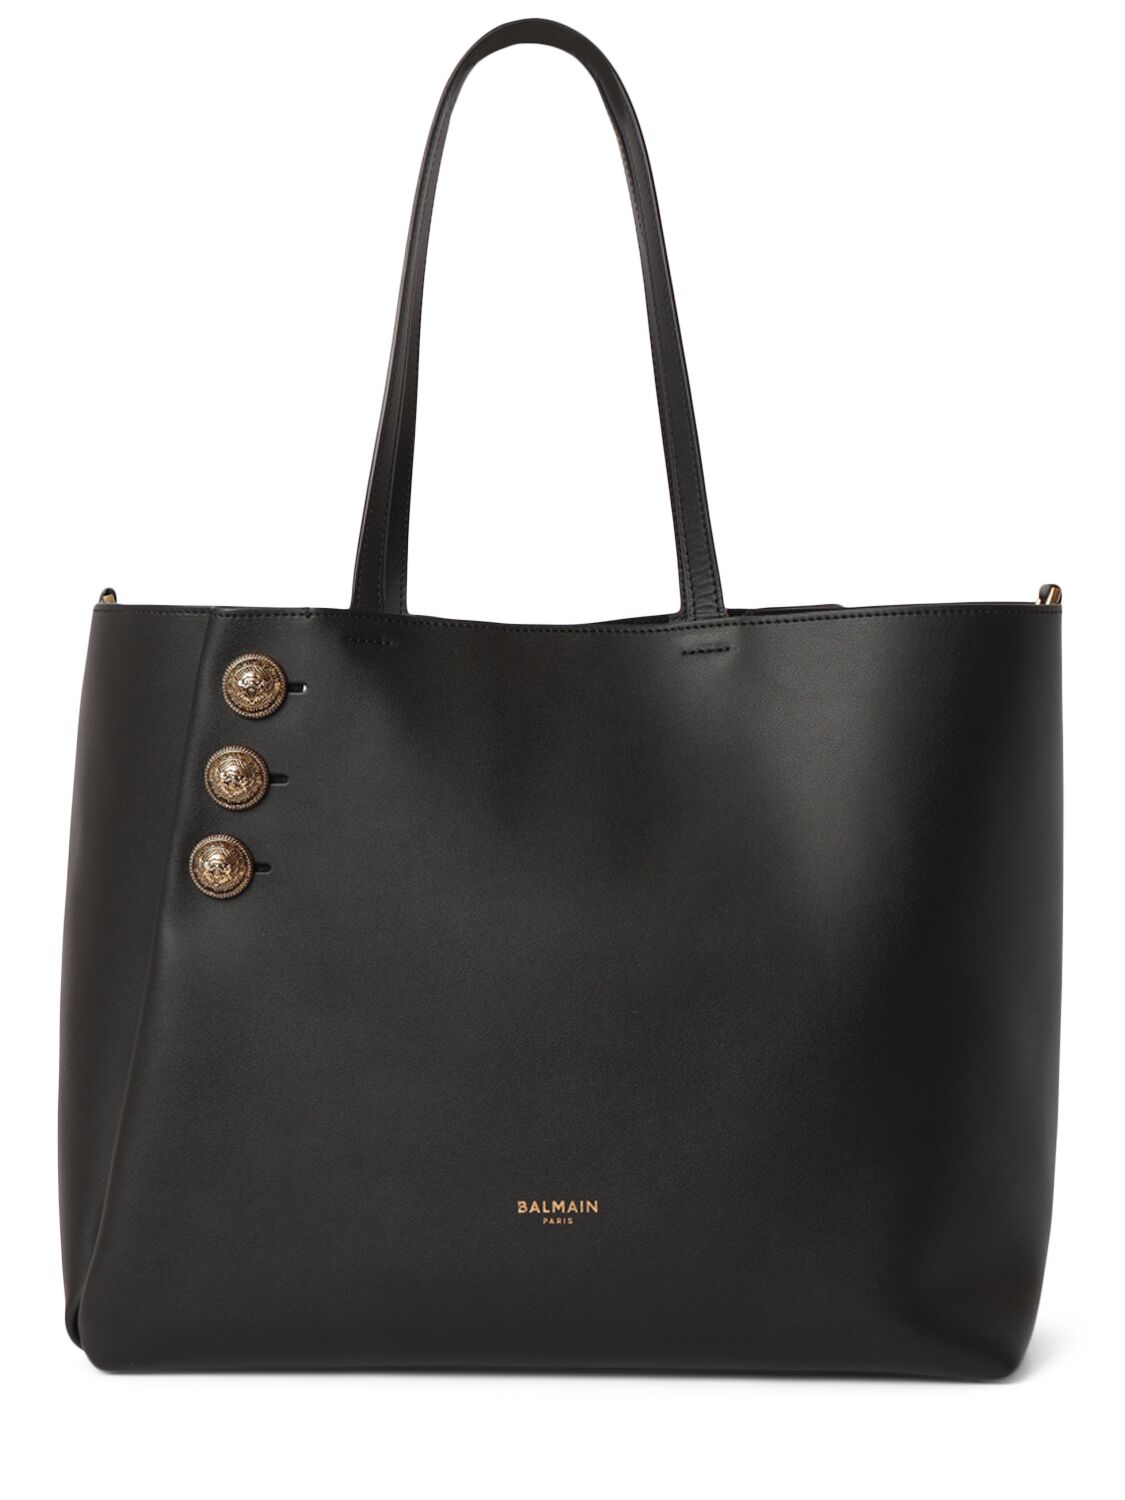 Balmain Embleme Leather Shopping Bag In Noir